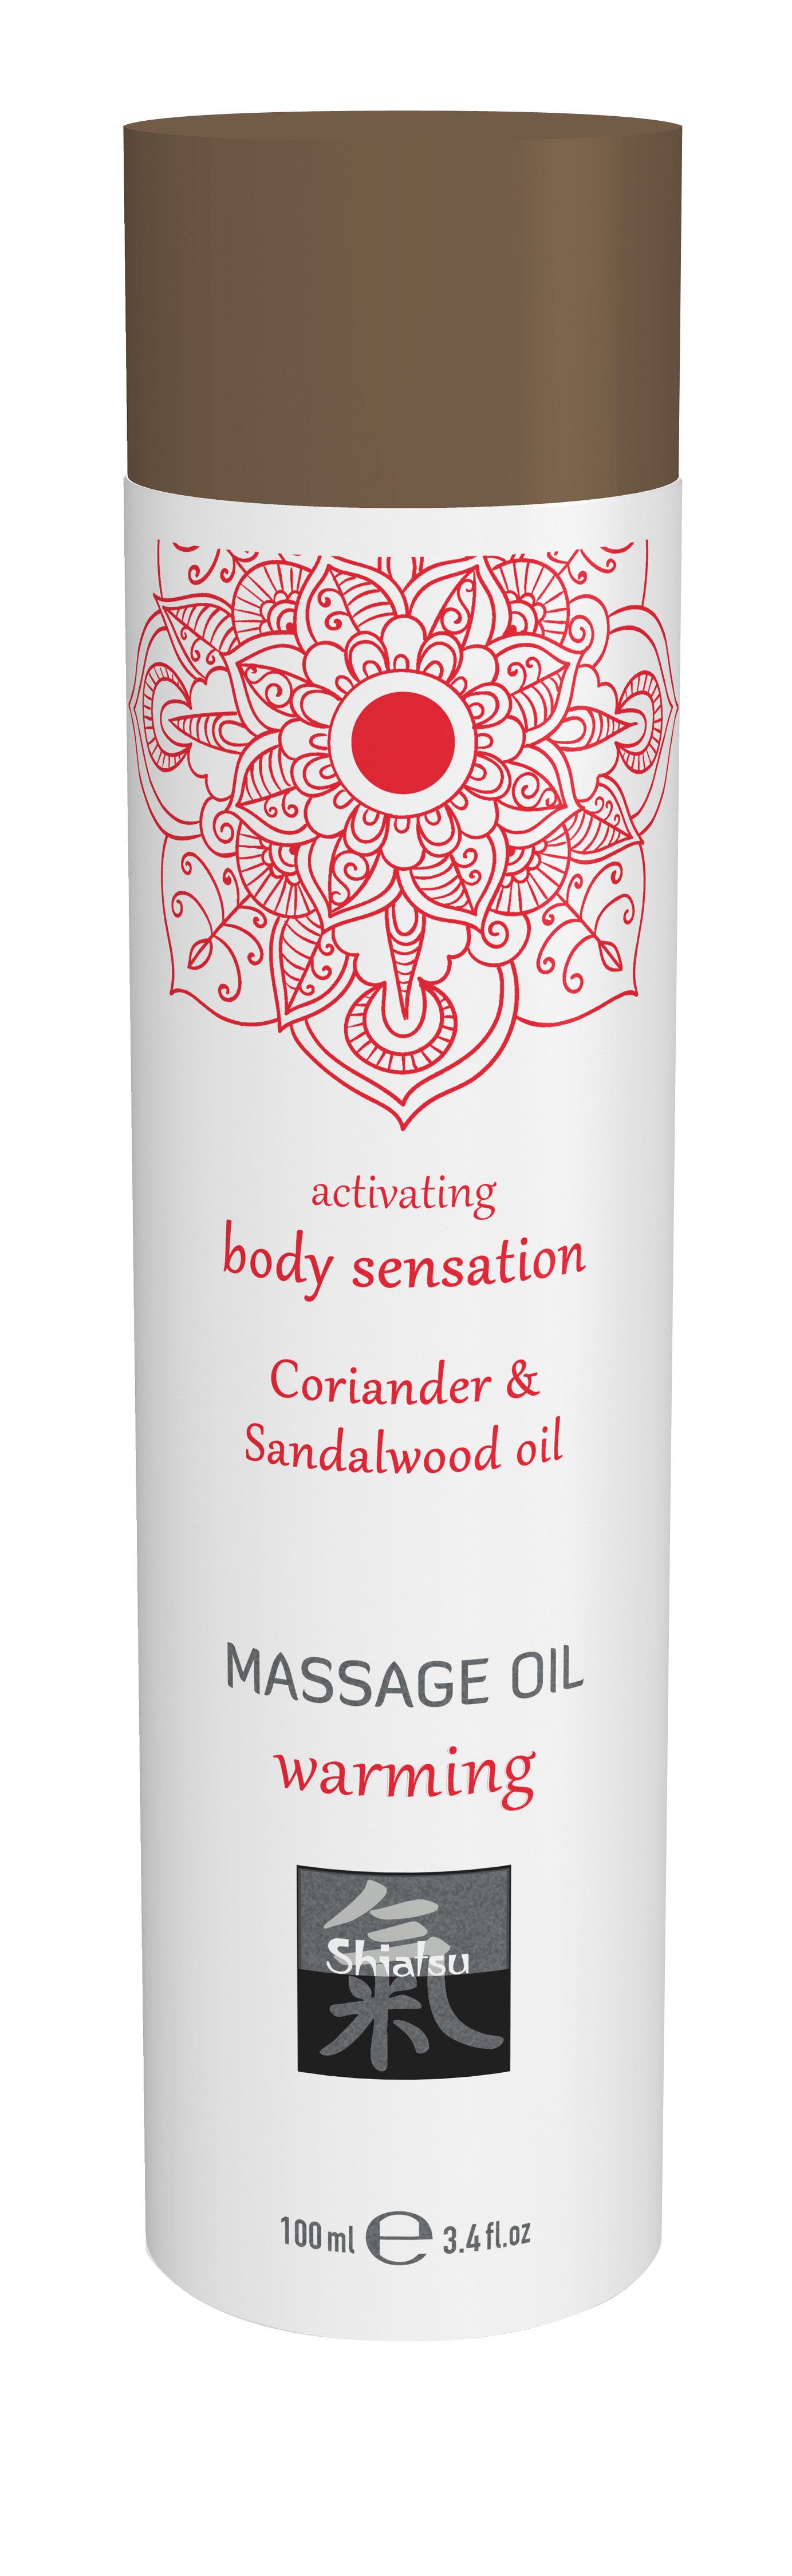 SHIATSU Massage oil warming Coriander & Sandalwood oil 100ml